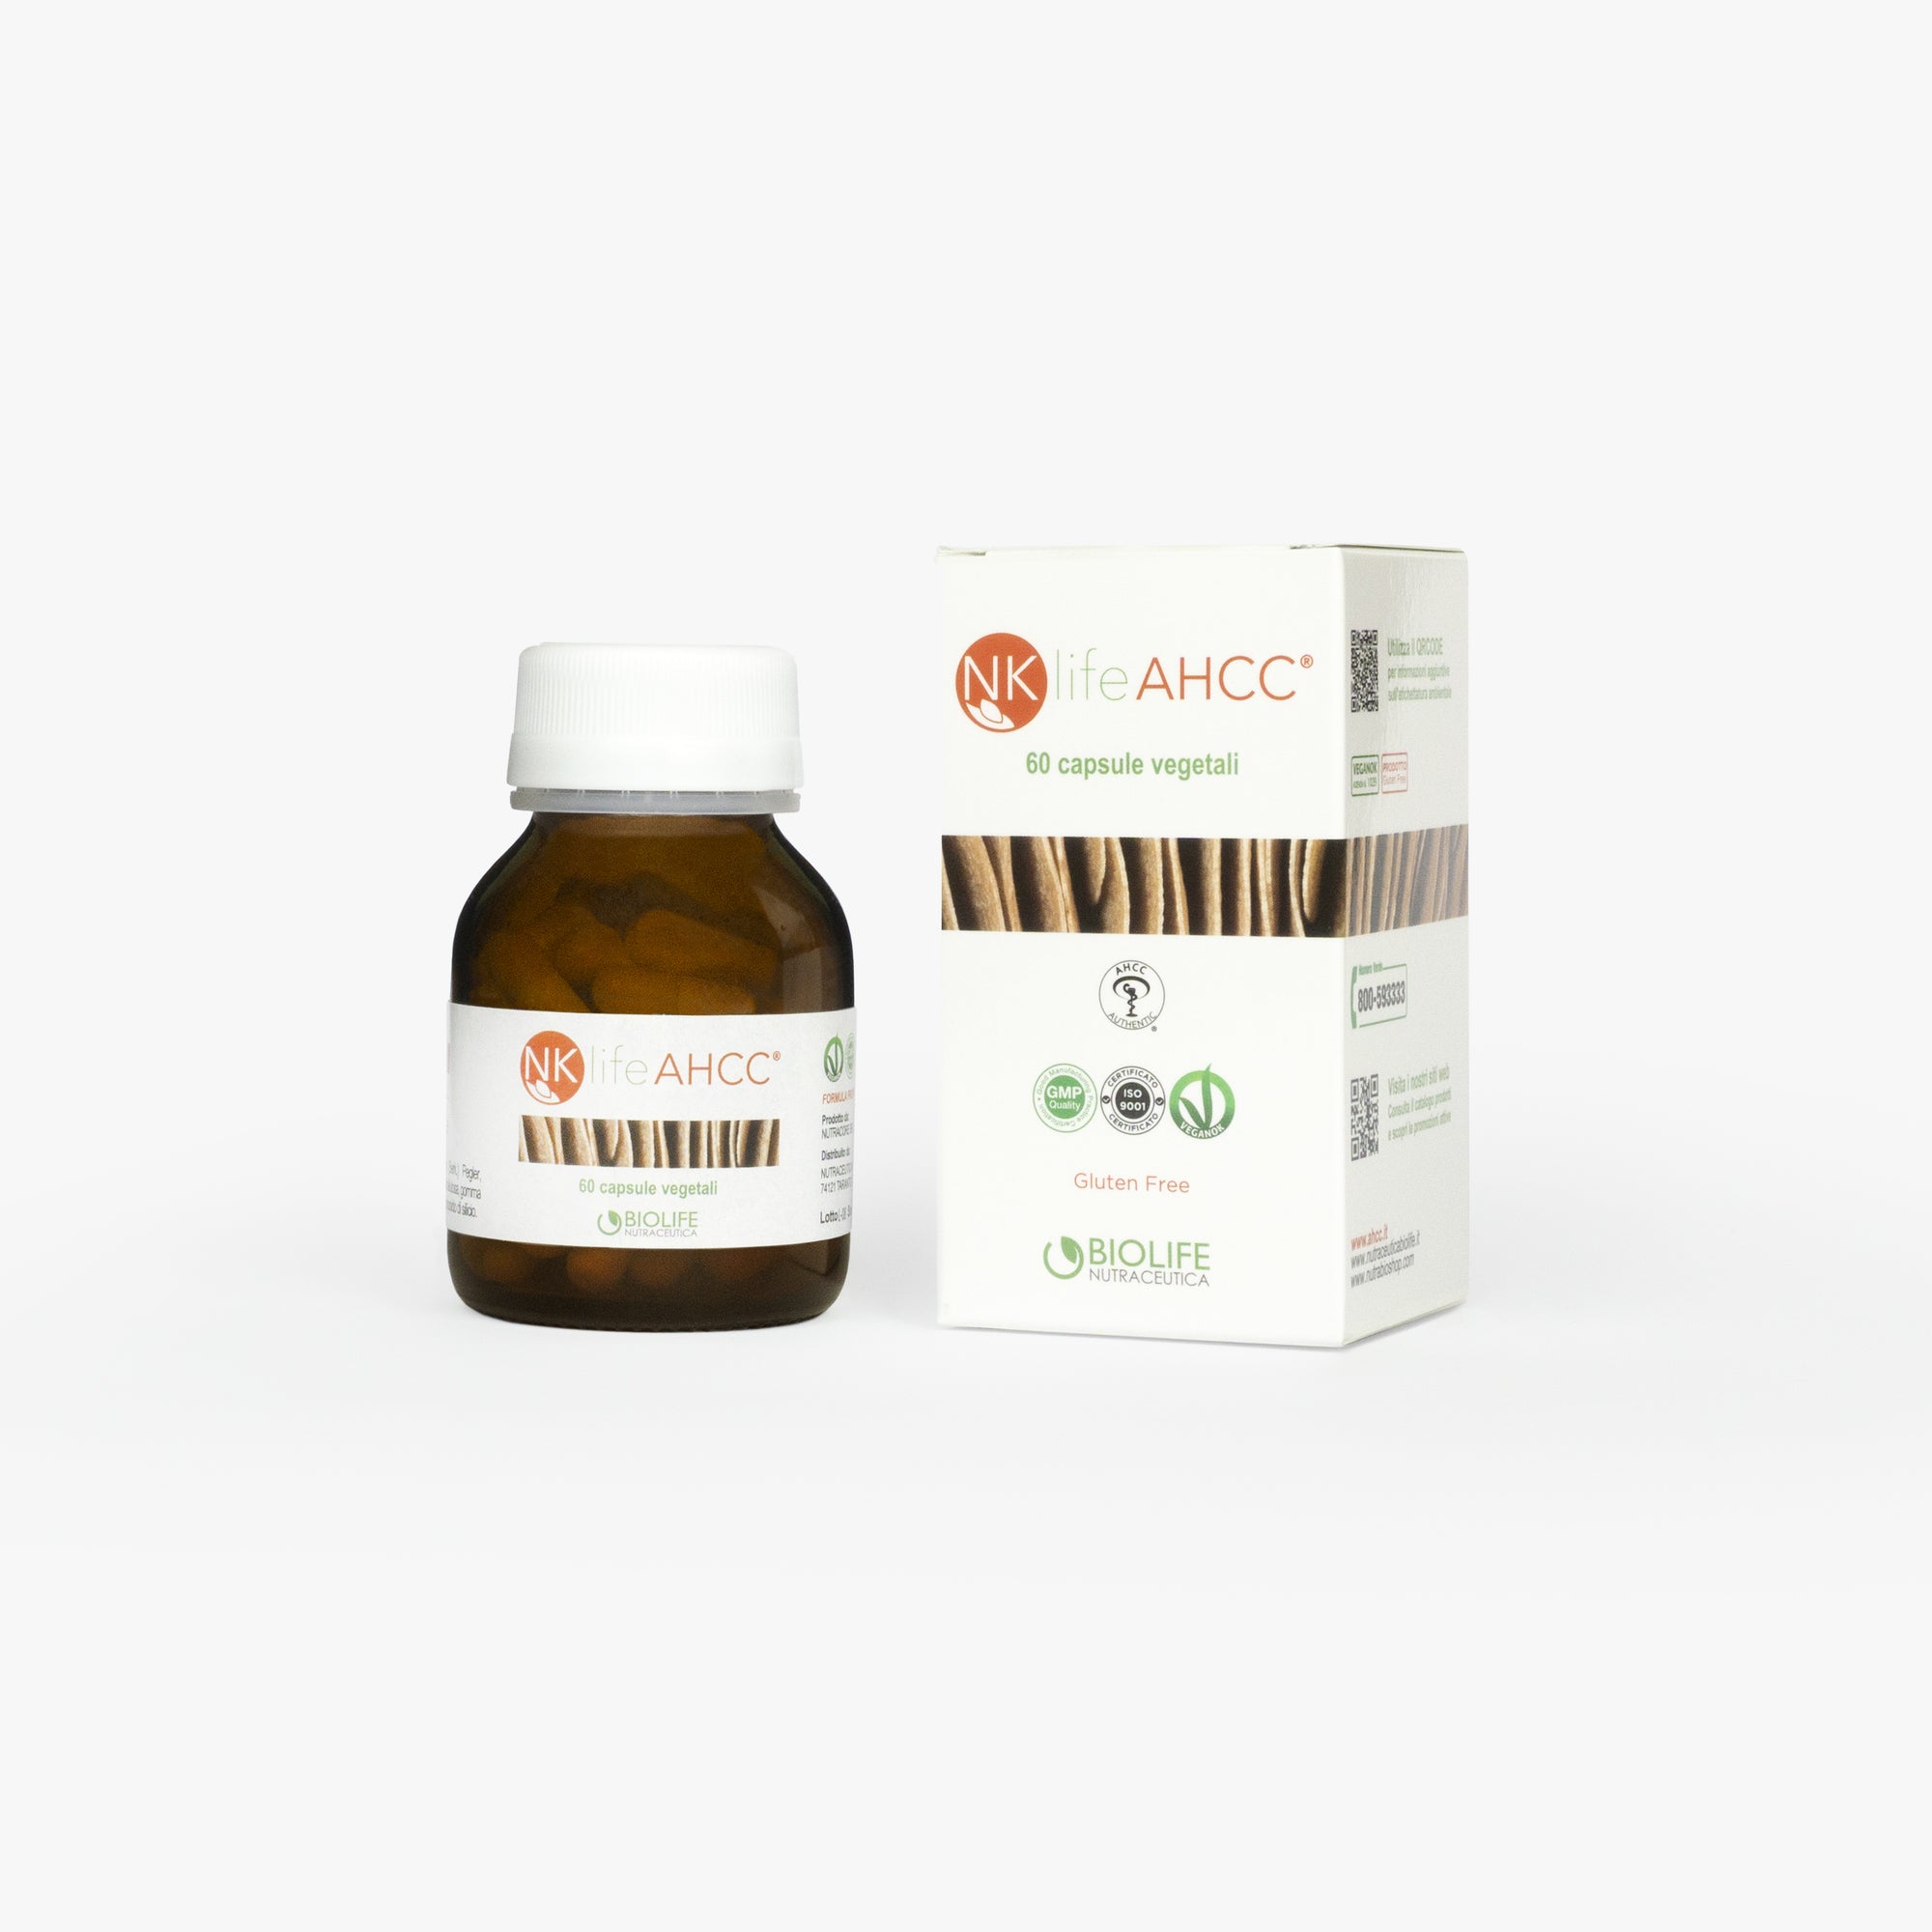 NKlife AHCC® Formato 60 capsule da 600 mg